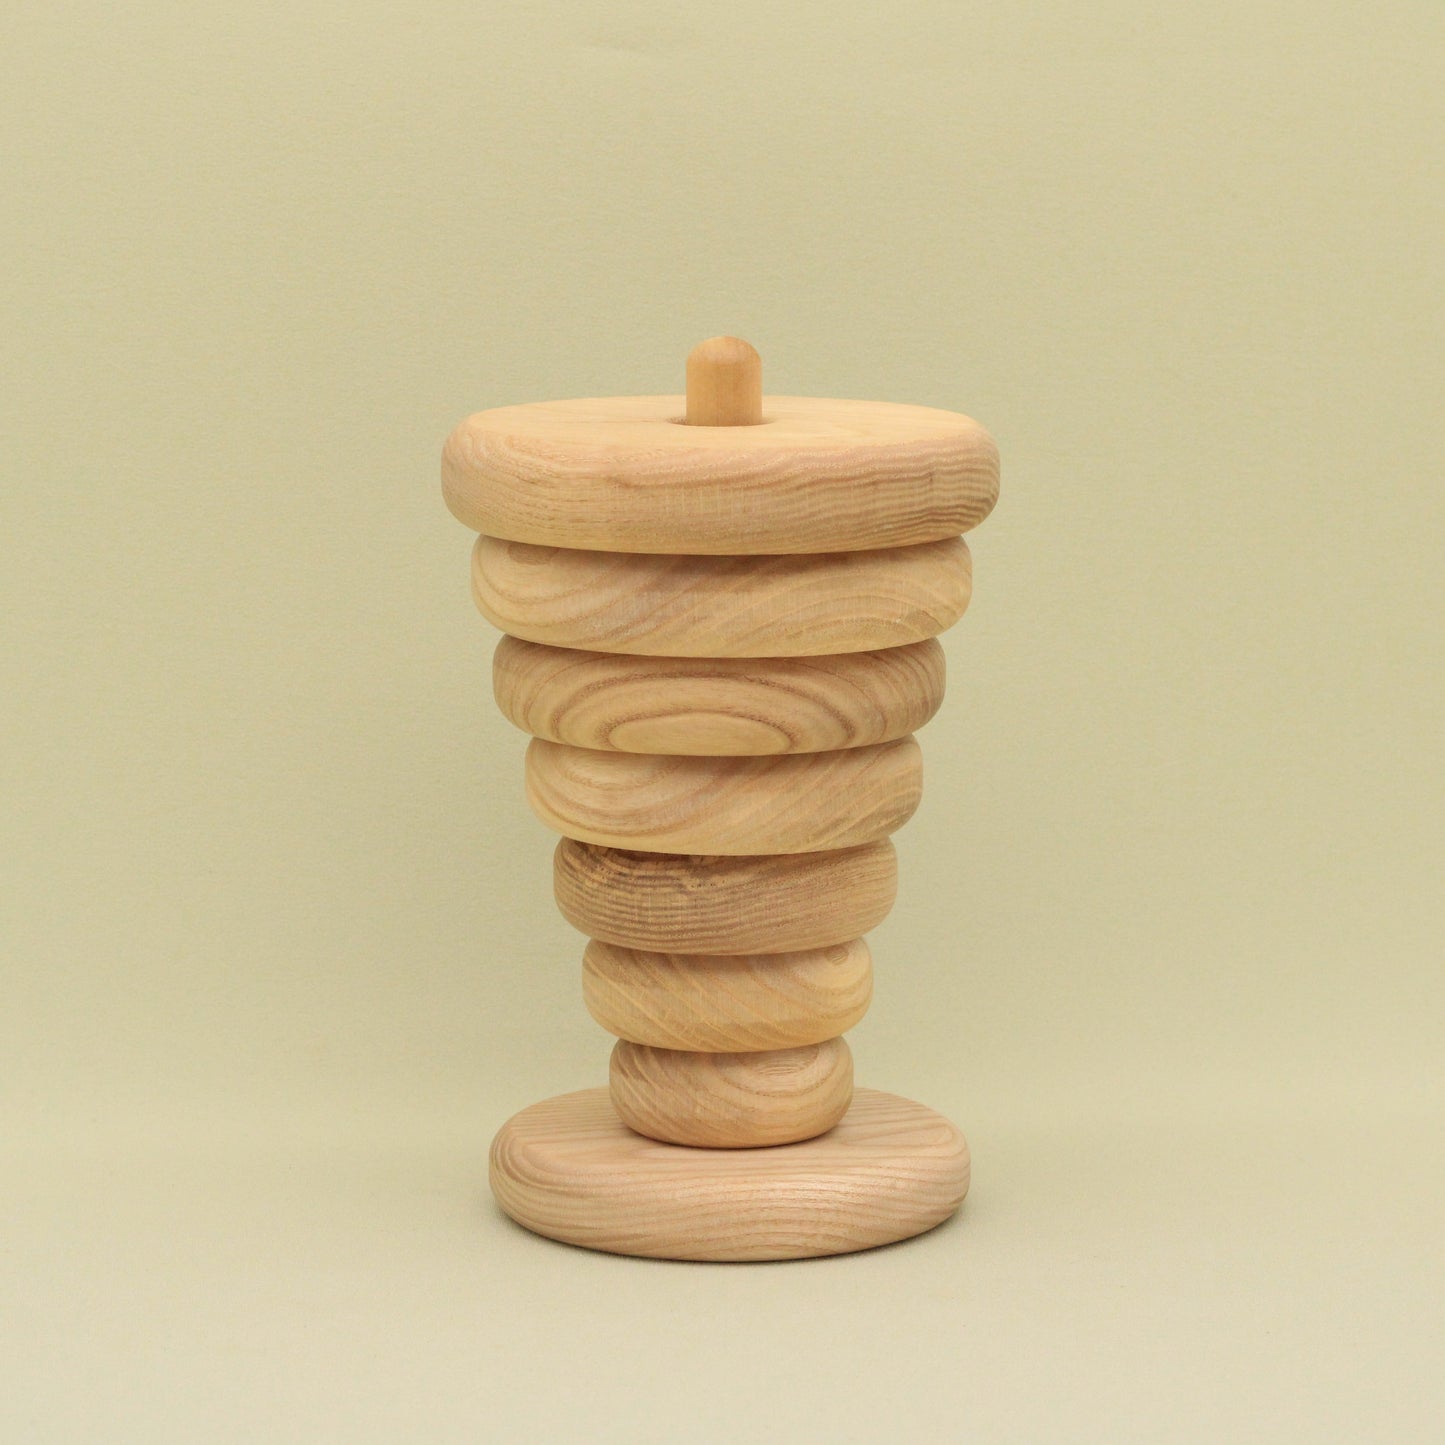 Lotes Toys Natural Circle Rings Wooden Stacking Pyramid - 7 pieces PY52